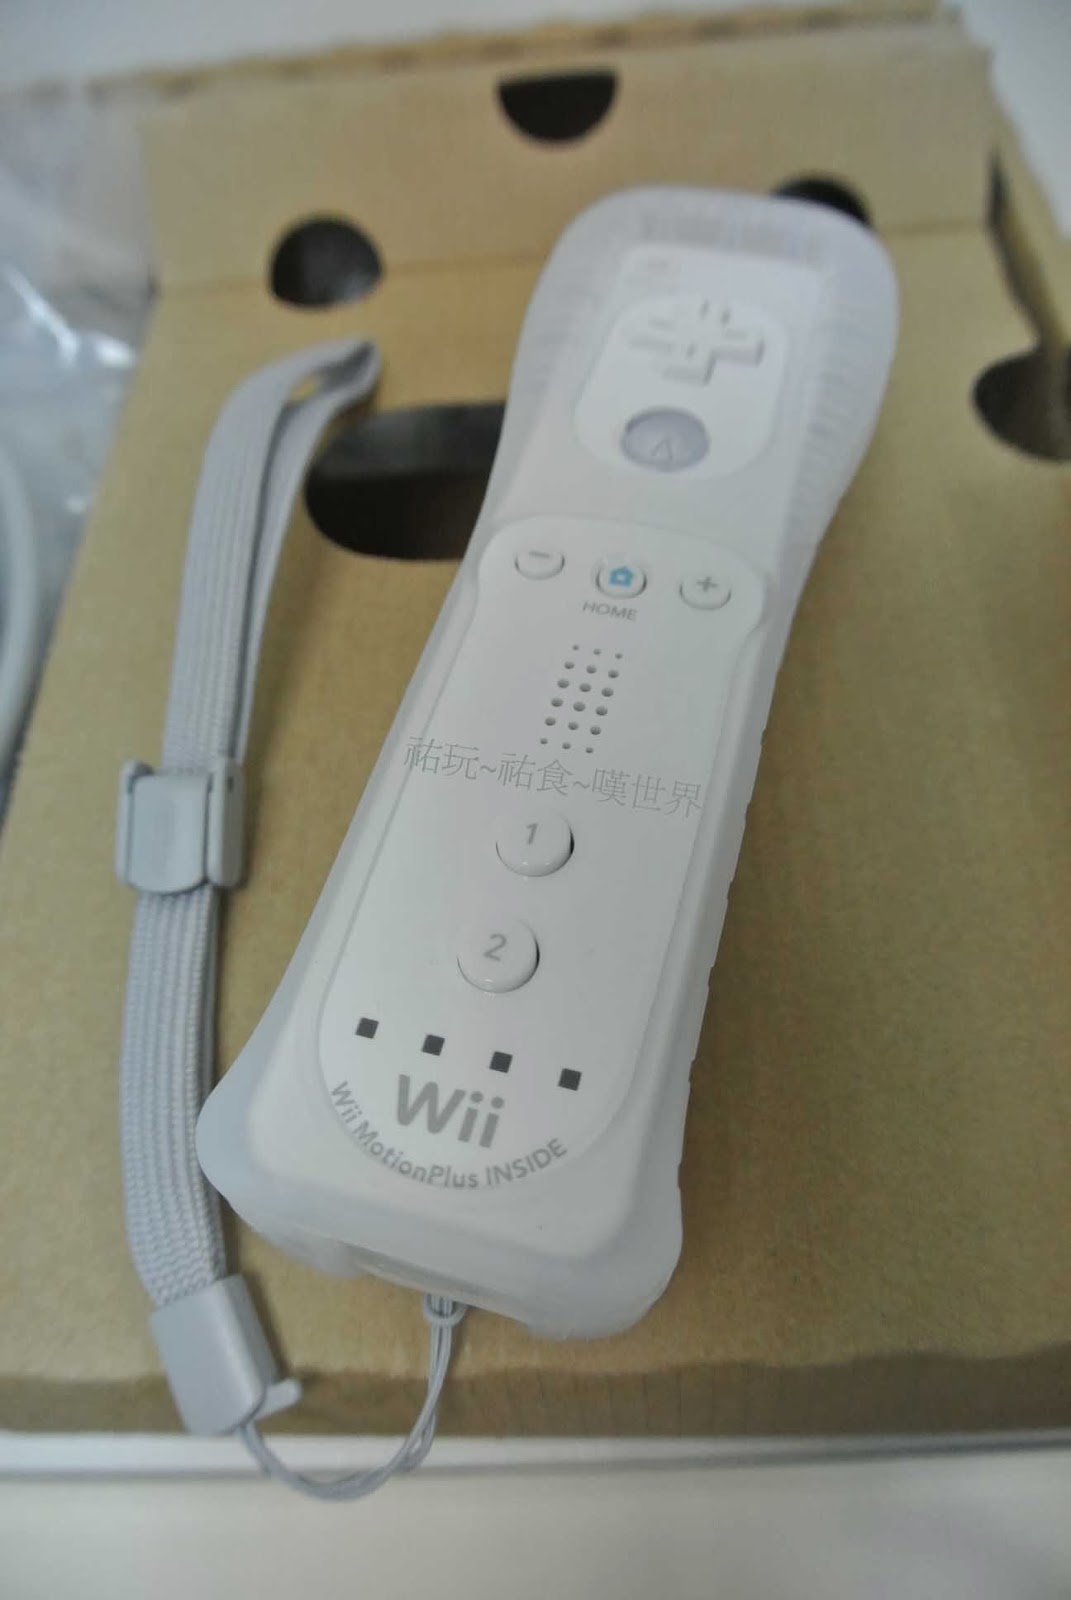 Wii U Family Premium Set Wii Fit U 開箱文 硬件篇 祐玩 祐食 嘆世界 痞客邦